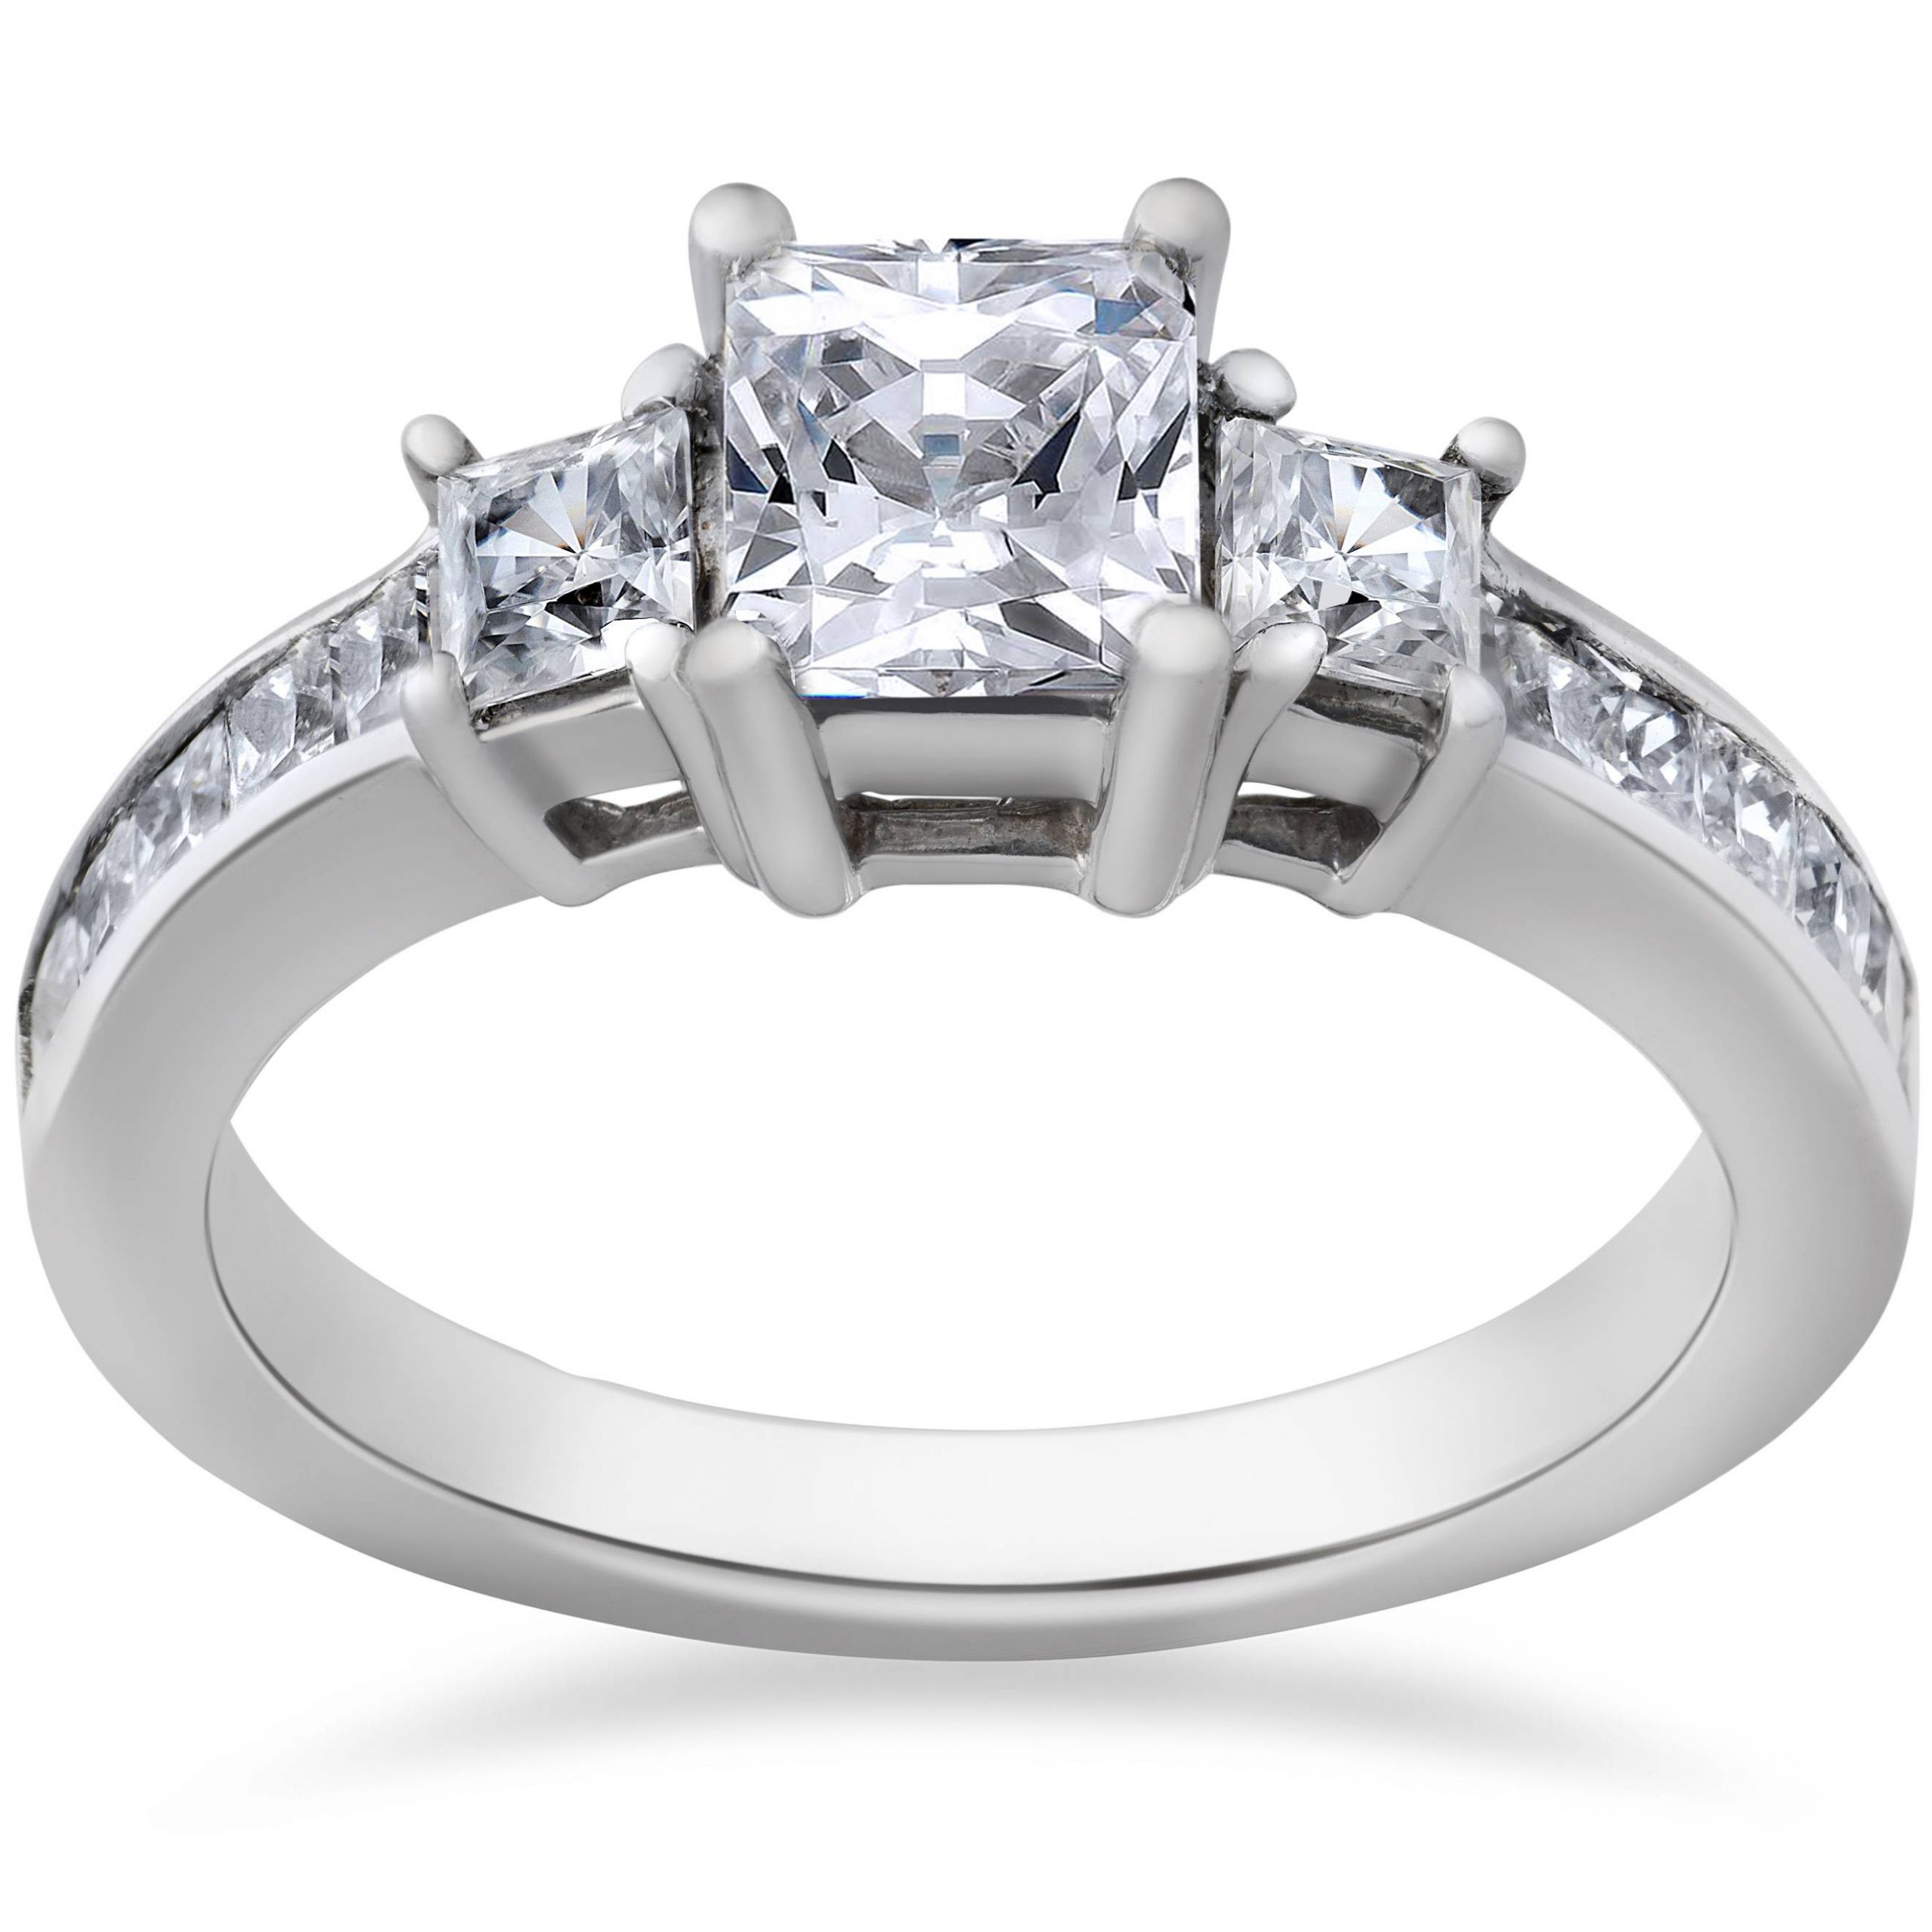 Princess Cut 3 Stone Engagement Rings
 Princess Cut Diamond Engagement Ring 3 Stone 1 1 2ct 14k